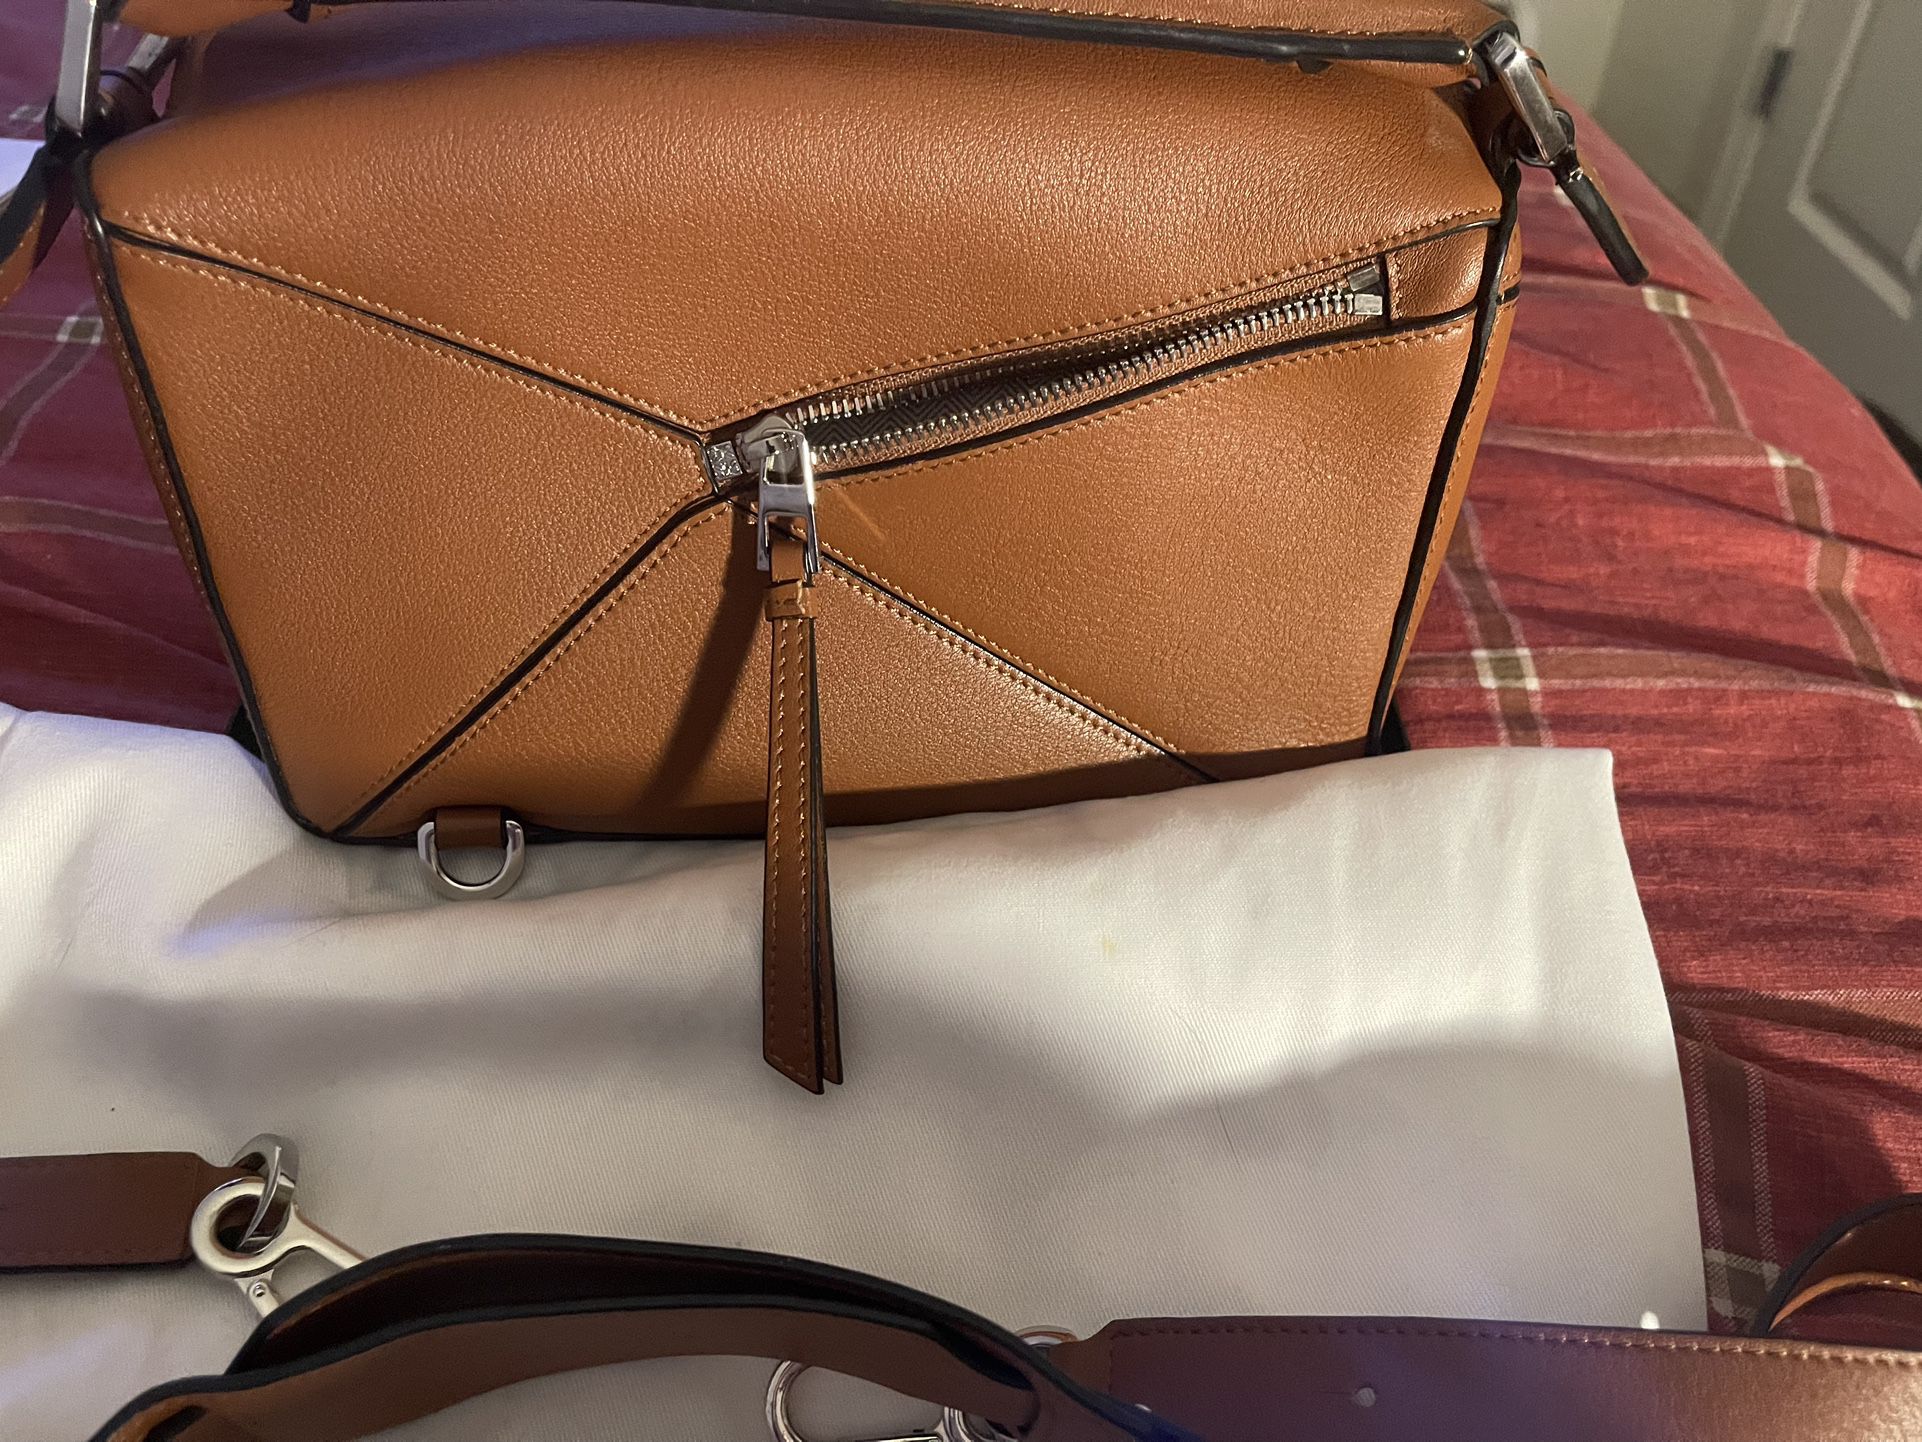 LOEWE Mini Puzzle Leather Bag - Farfetch